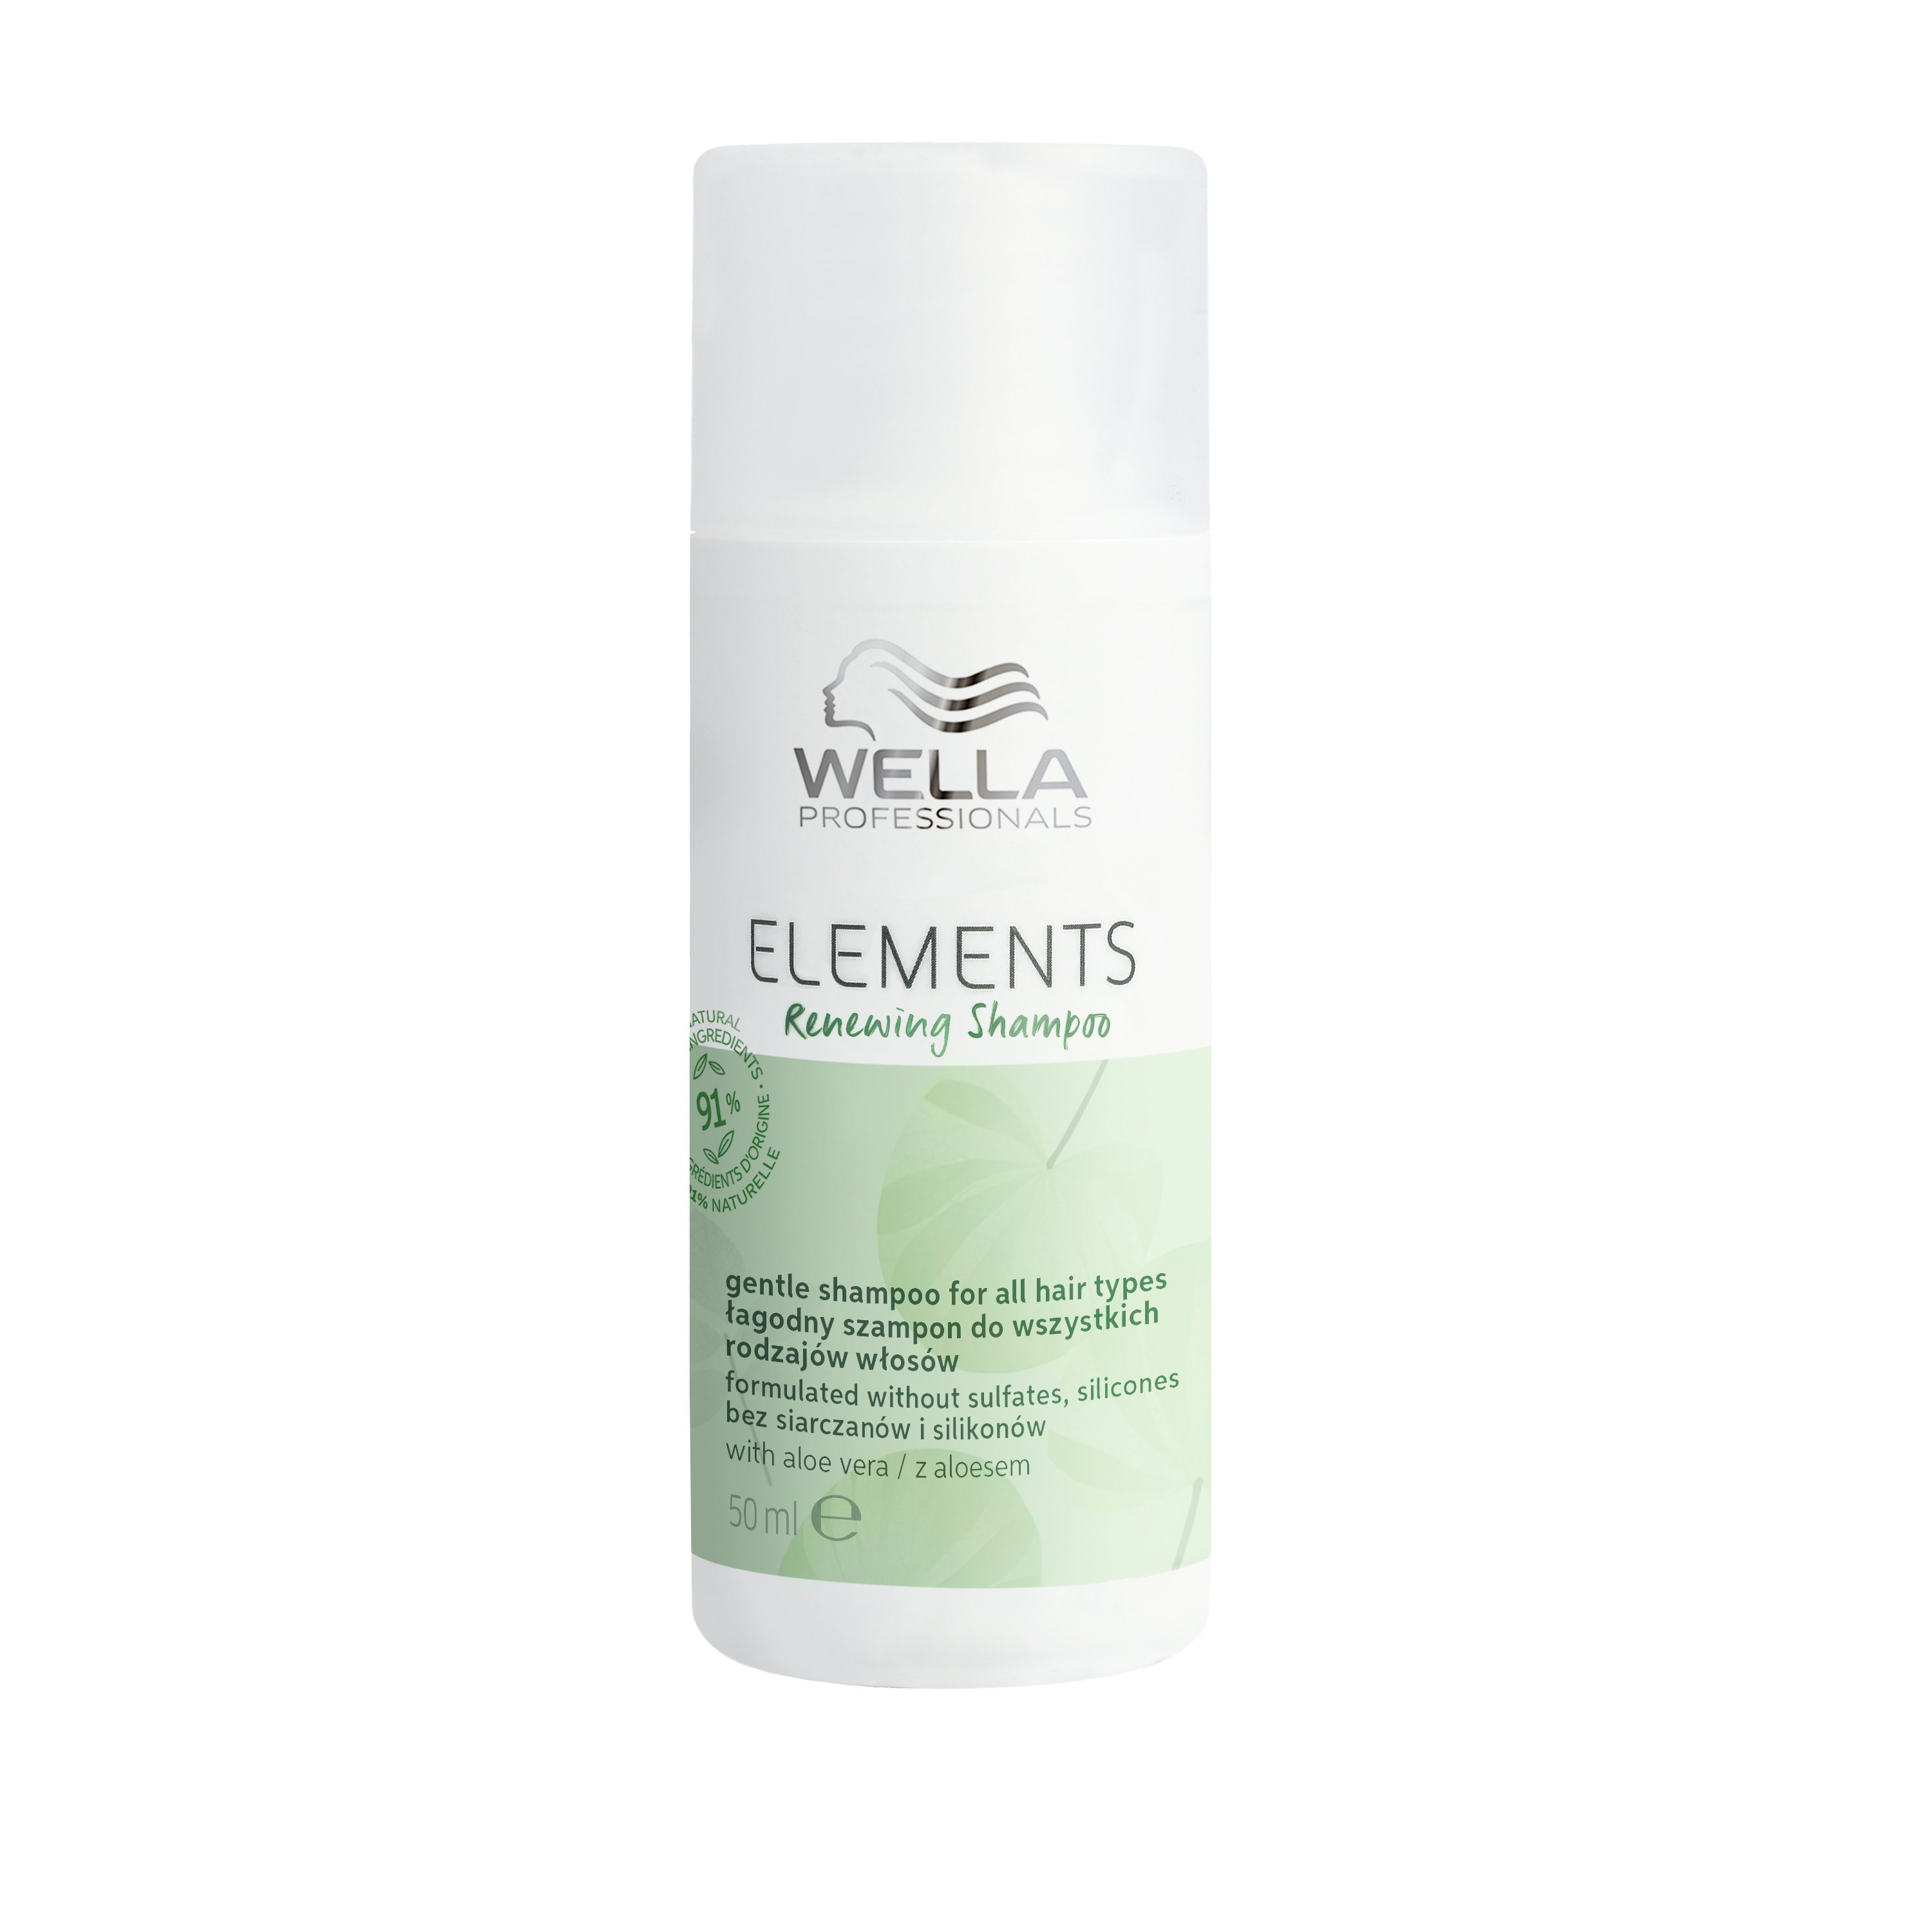 Wella Elements Renewing Shampoo 50ml